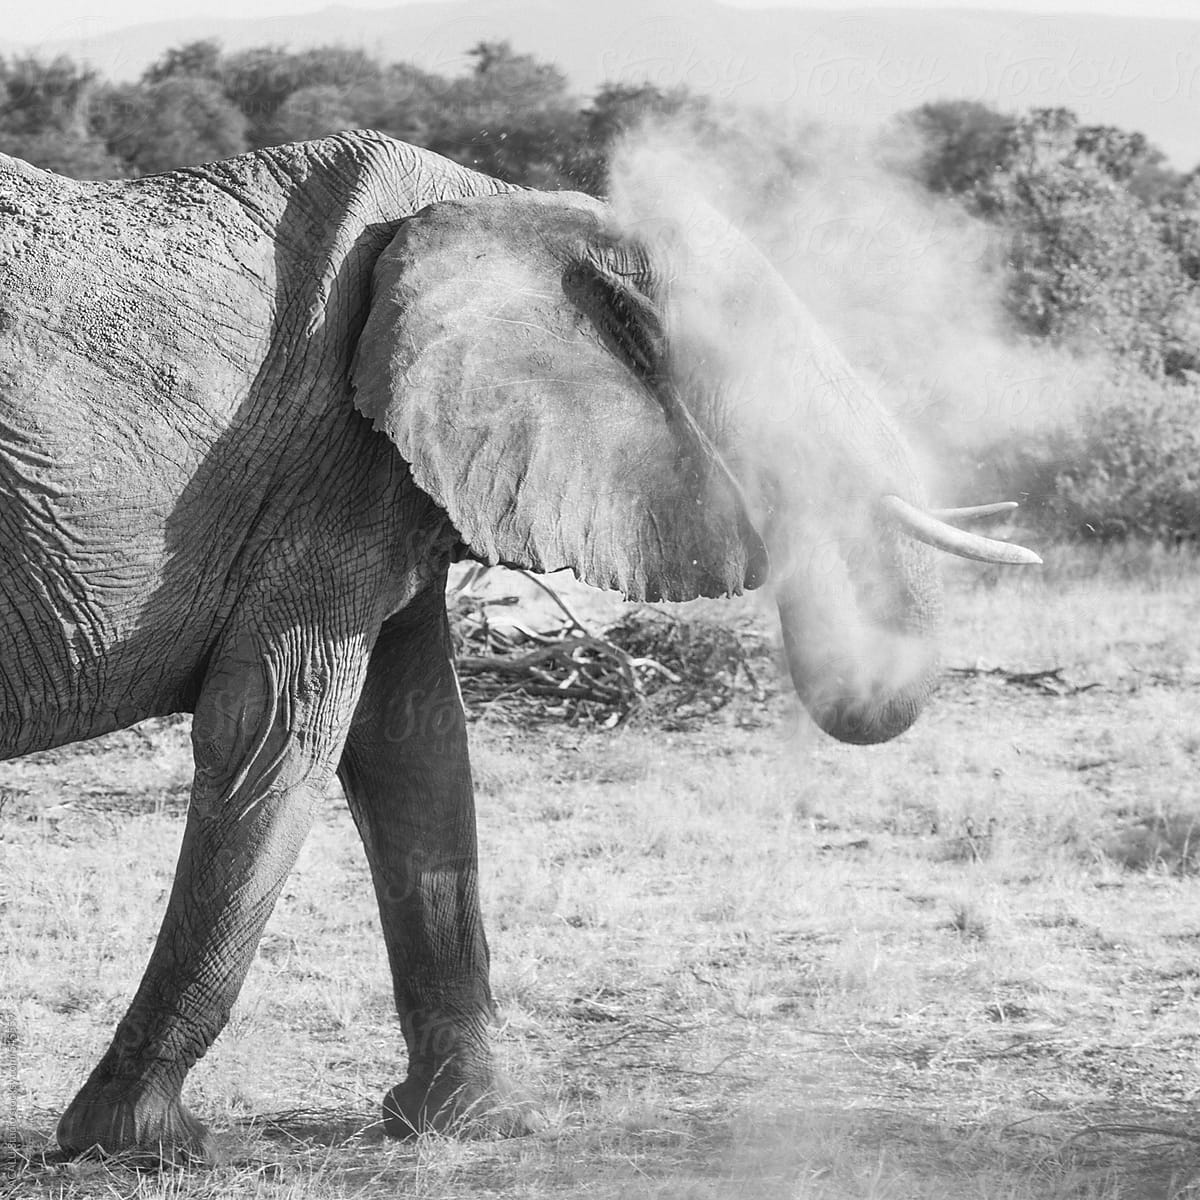 Elephant throwing sand